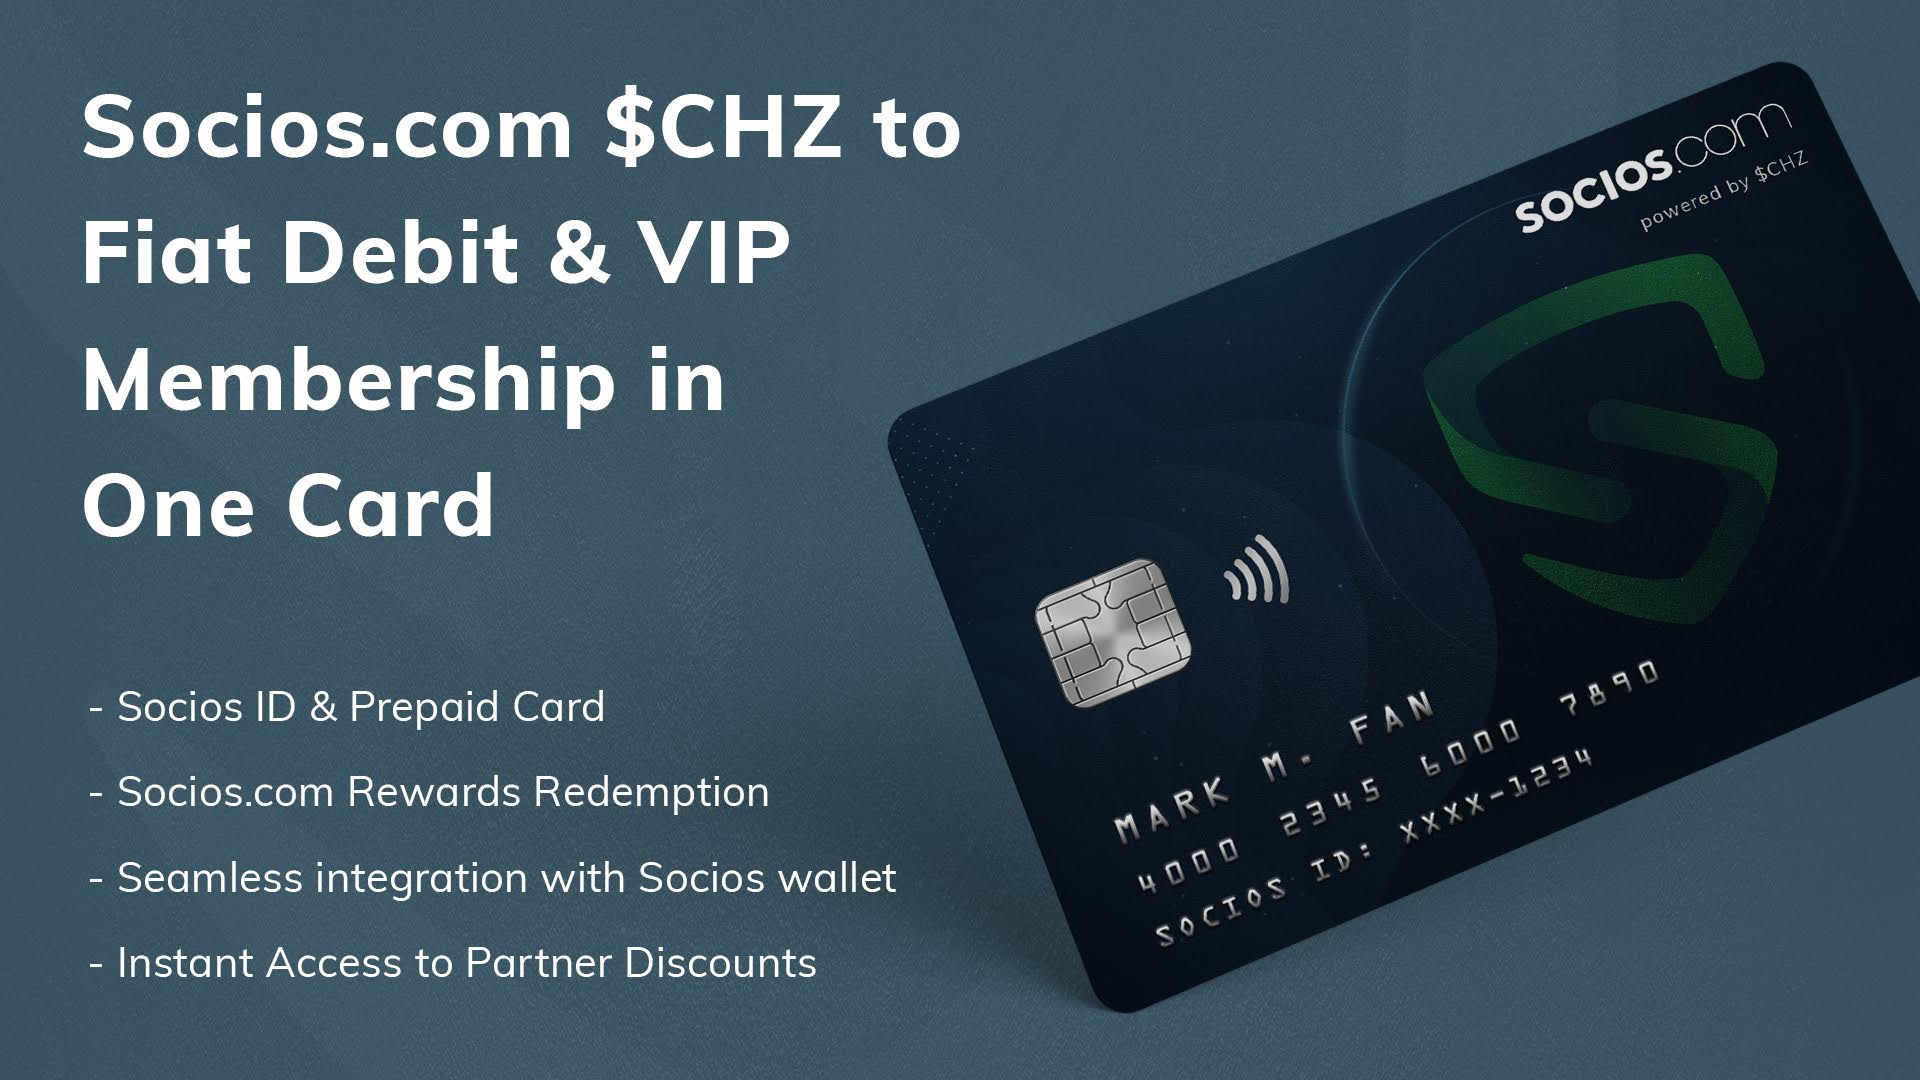 Socios.com to launch crypto to Fiat debit/membership card ...